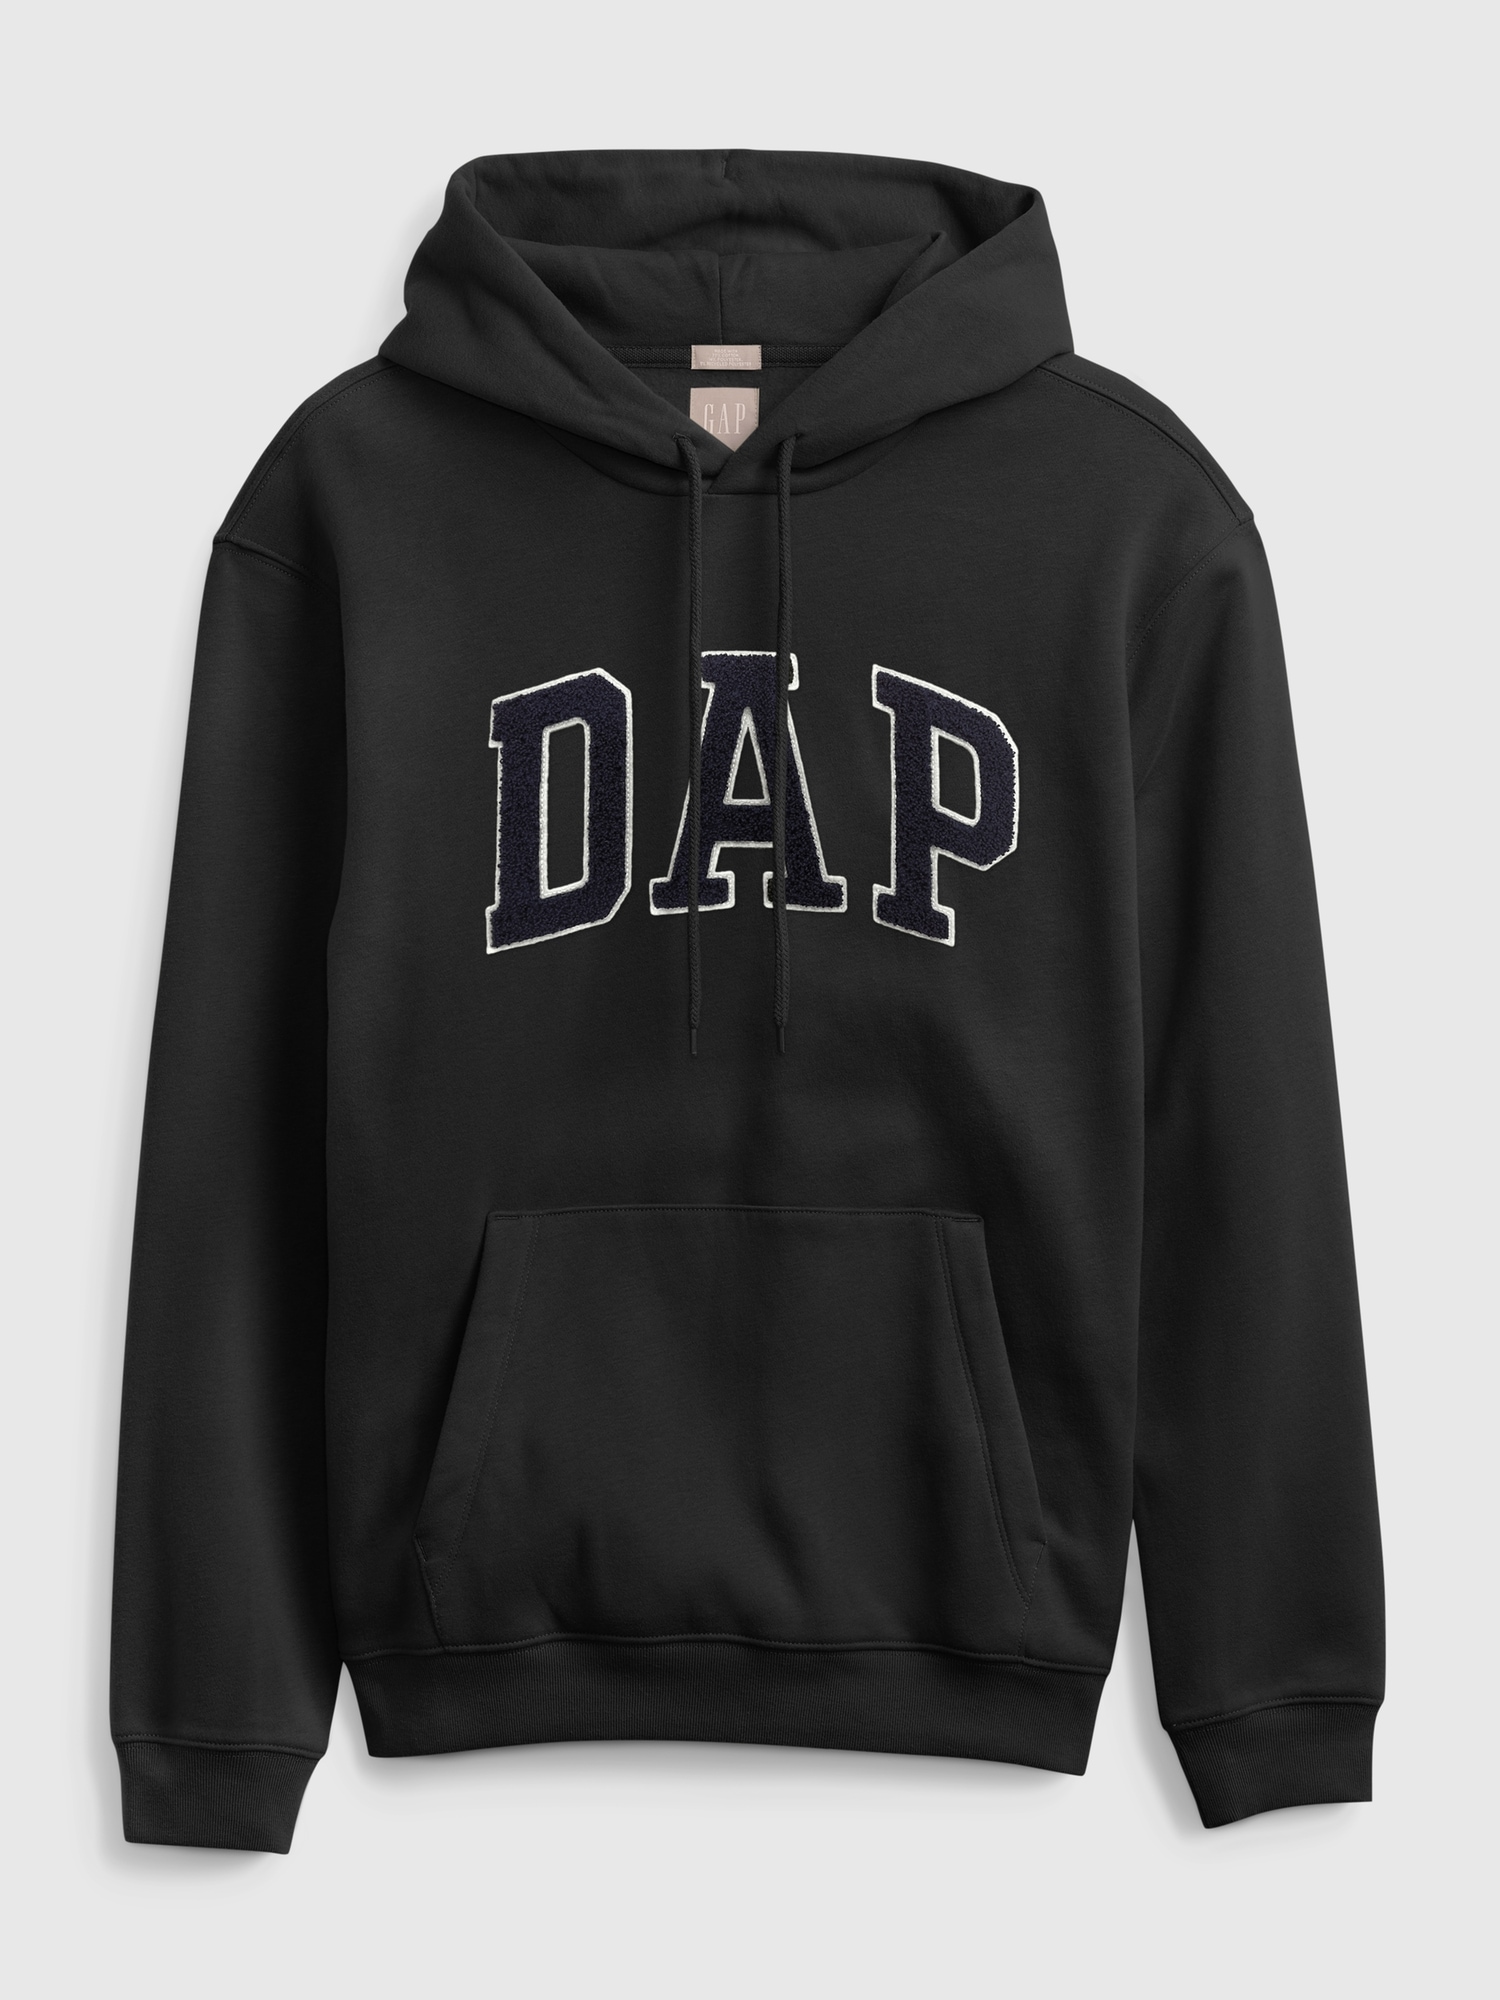 Limited Edition DAP GAP Hoodie | Gap